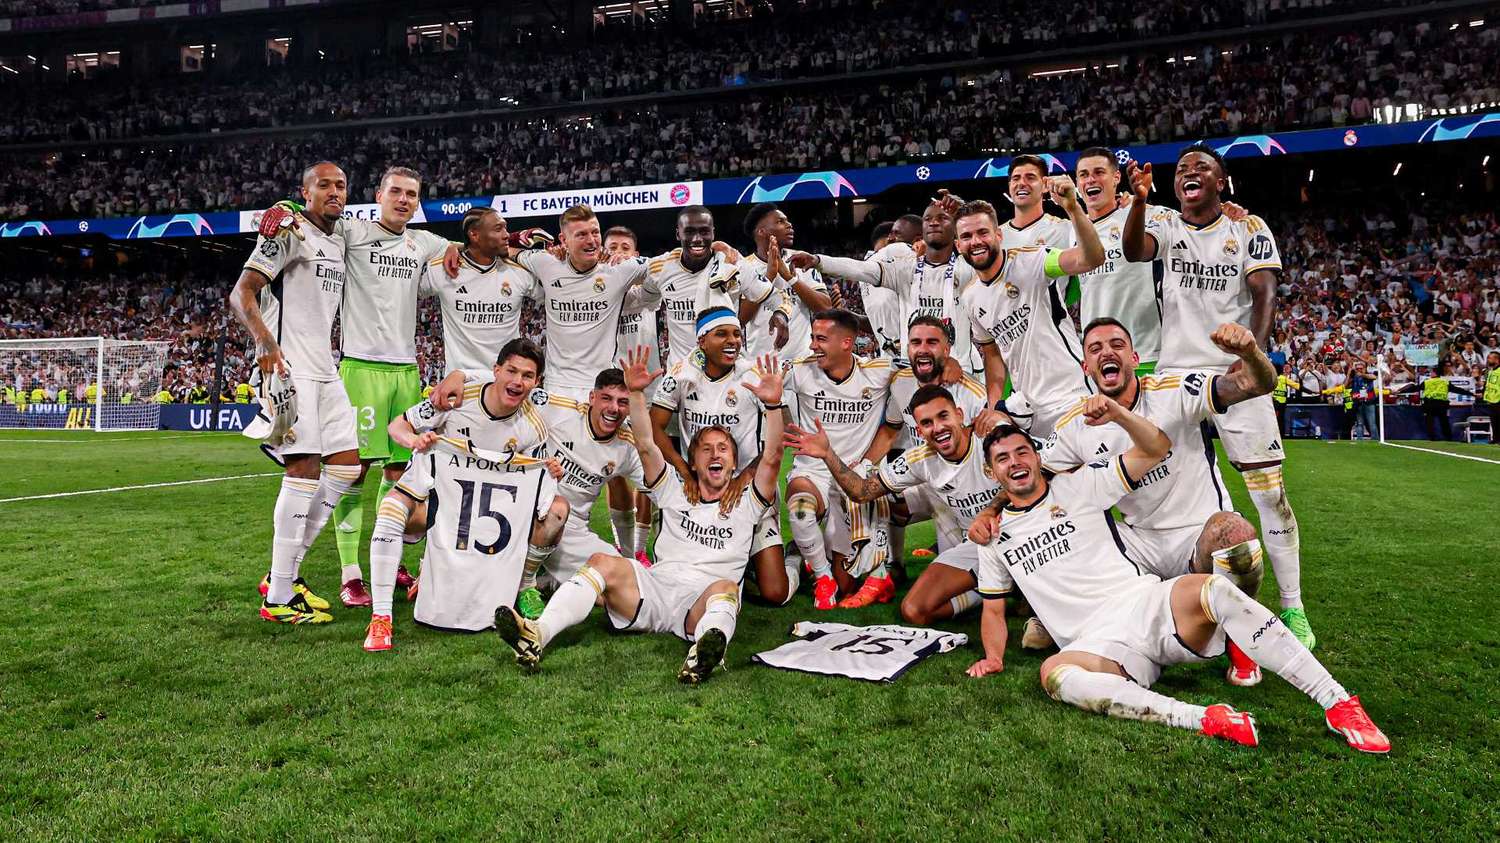 El Real Madrid a una nueva final de Champions League